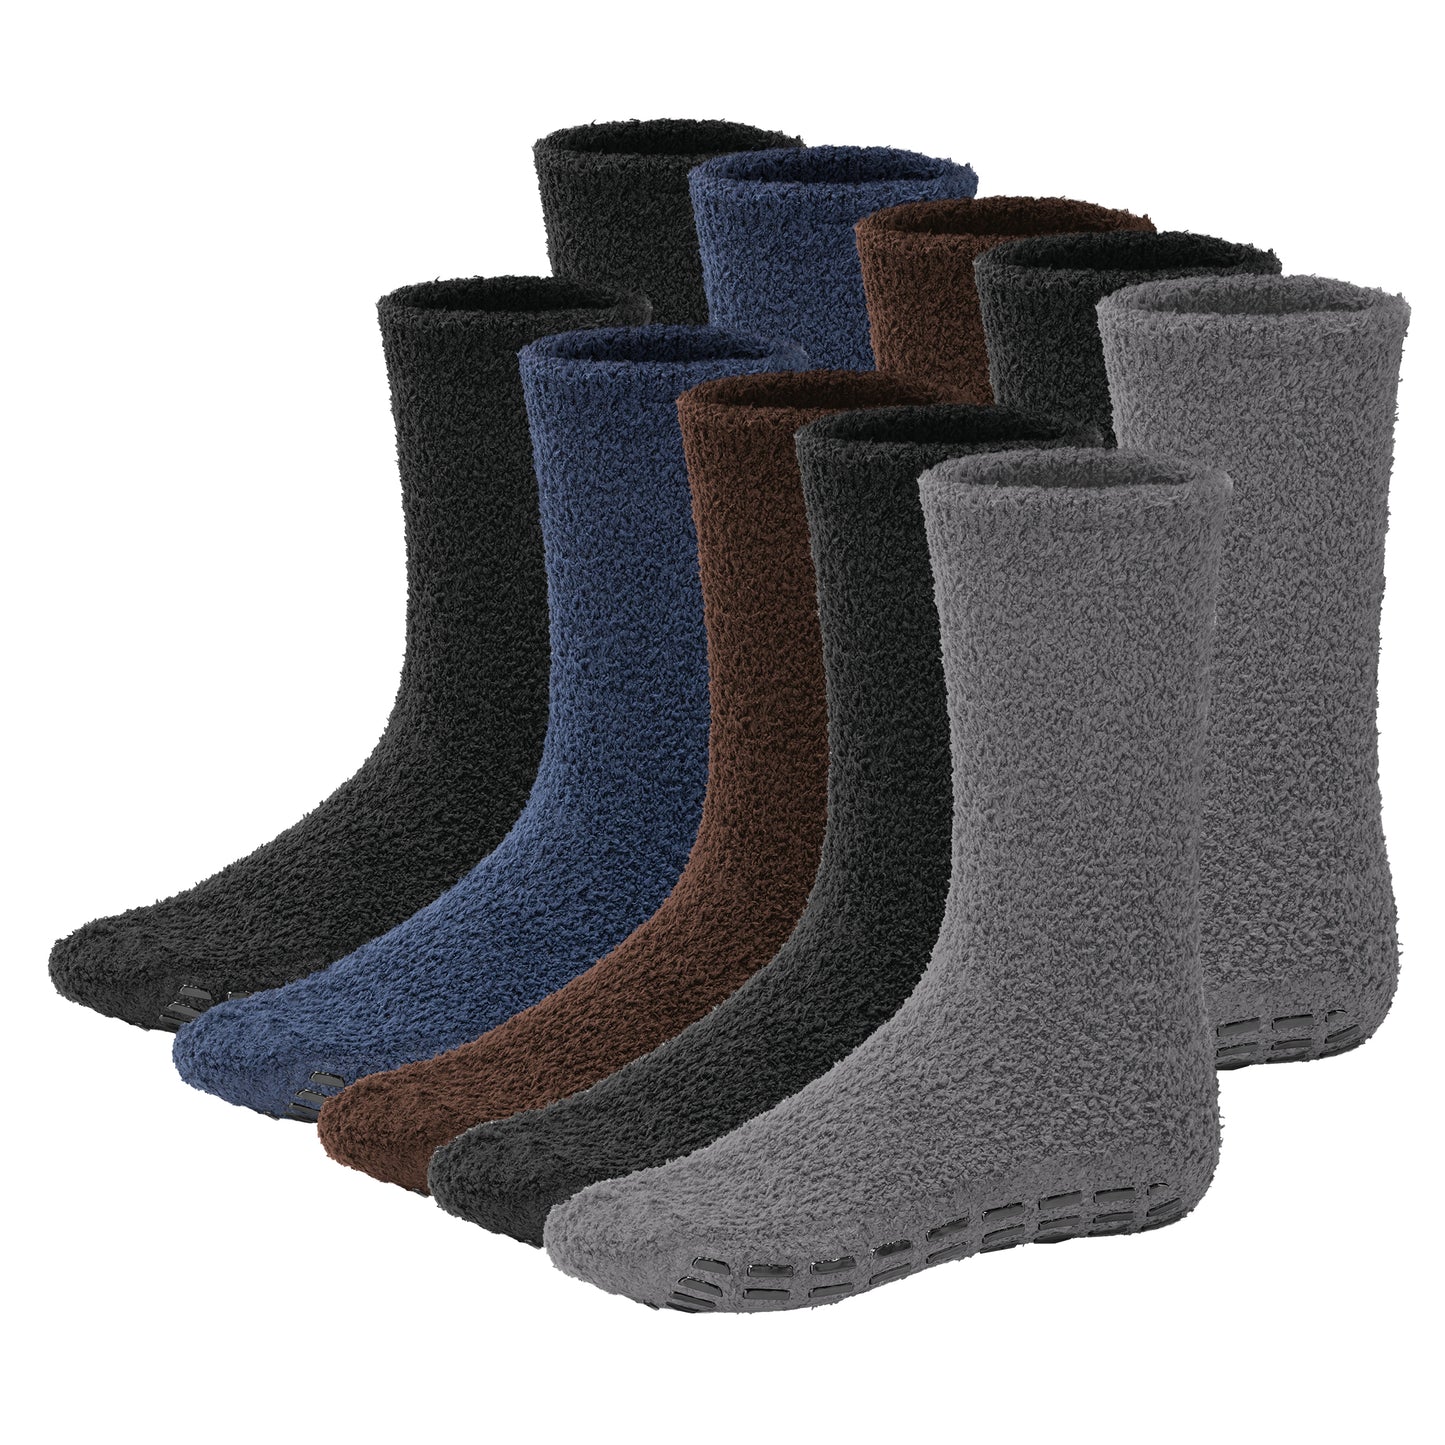 Fuzzy Men's Socks - 5 Pairs